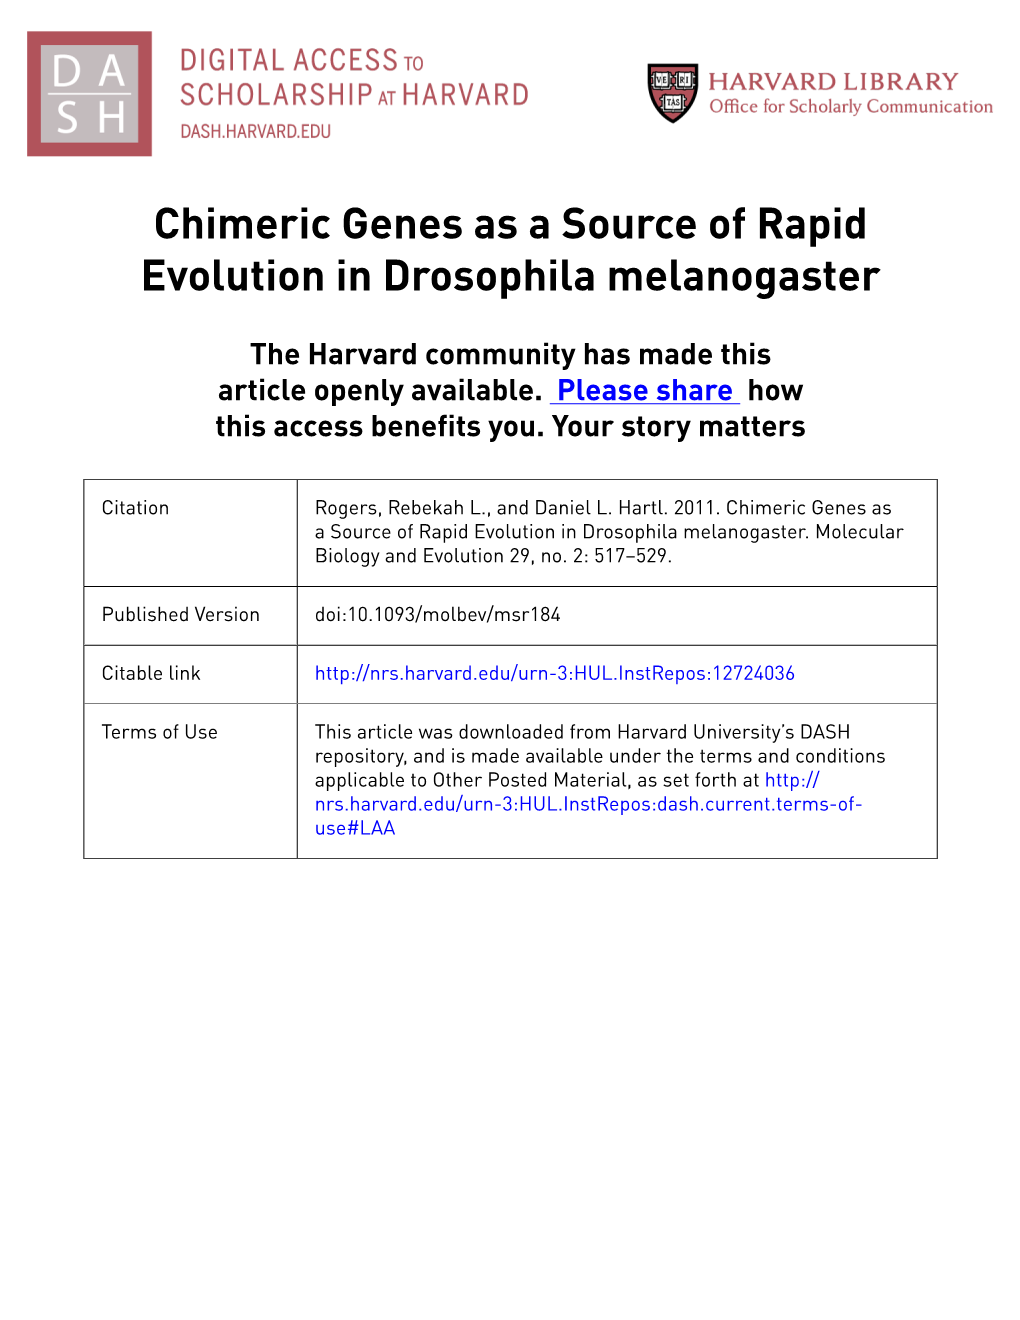 Chimeric Genes As a Source of Rapid Evolution in Drosophila Melanogaster